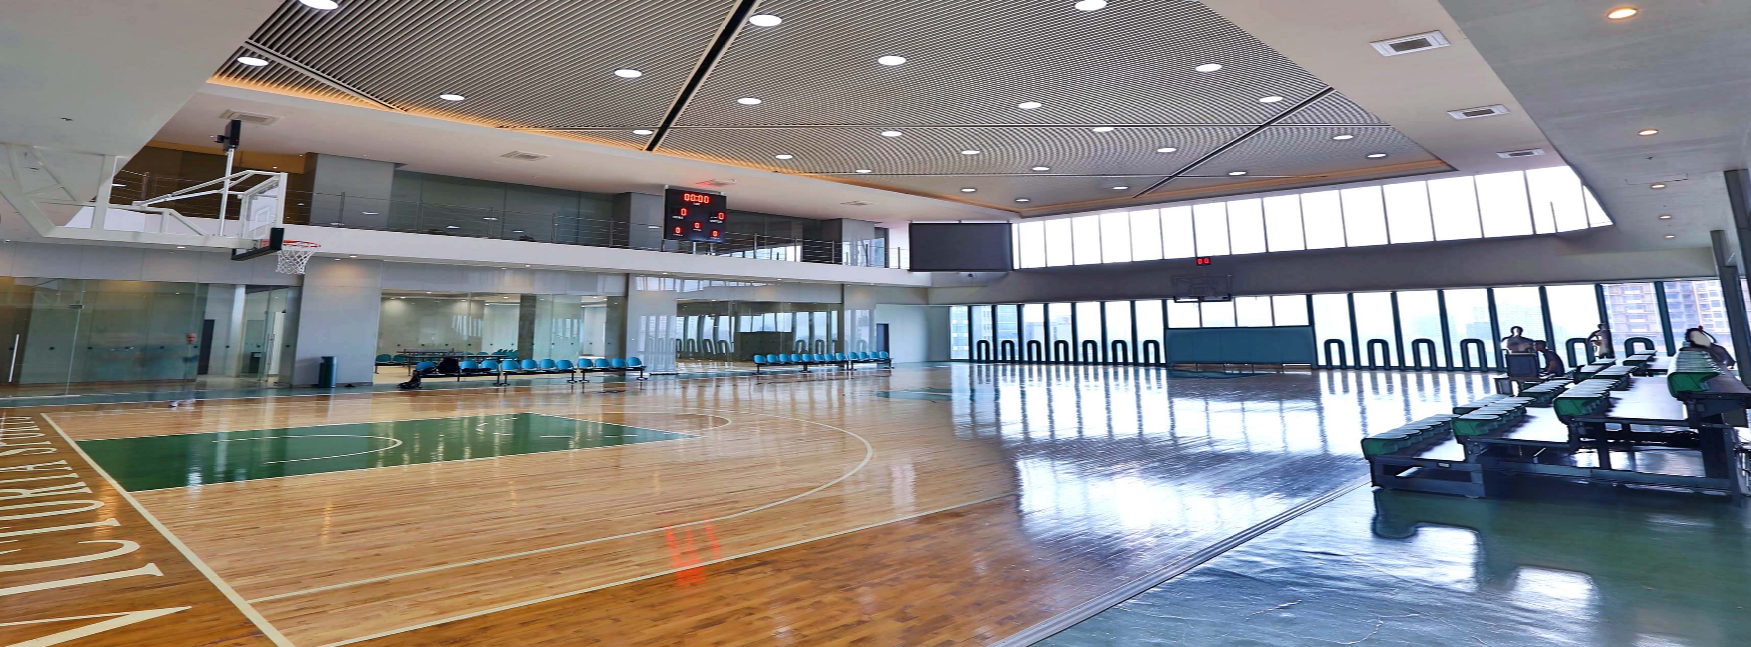 Victoria Sports Tower Monumento Basketball Court